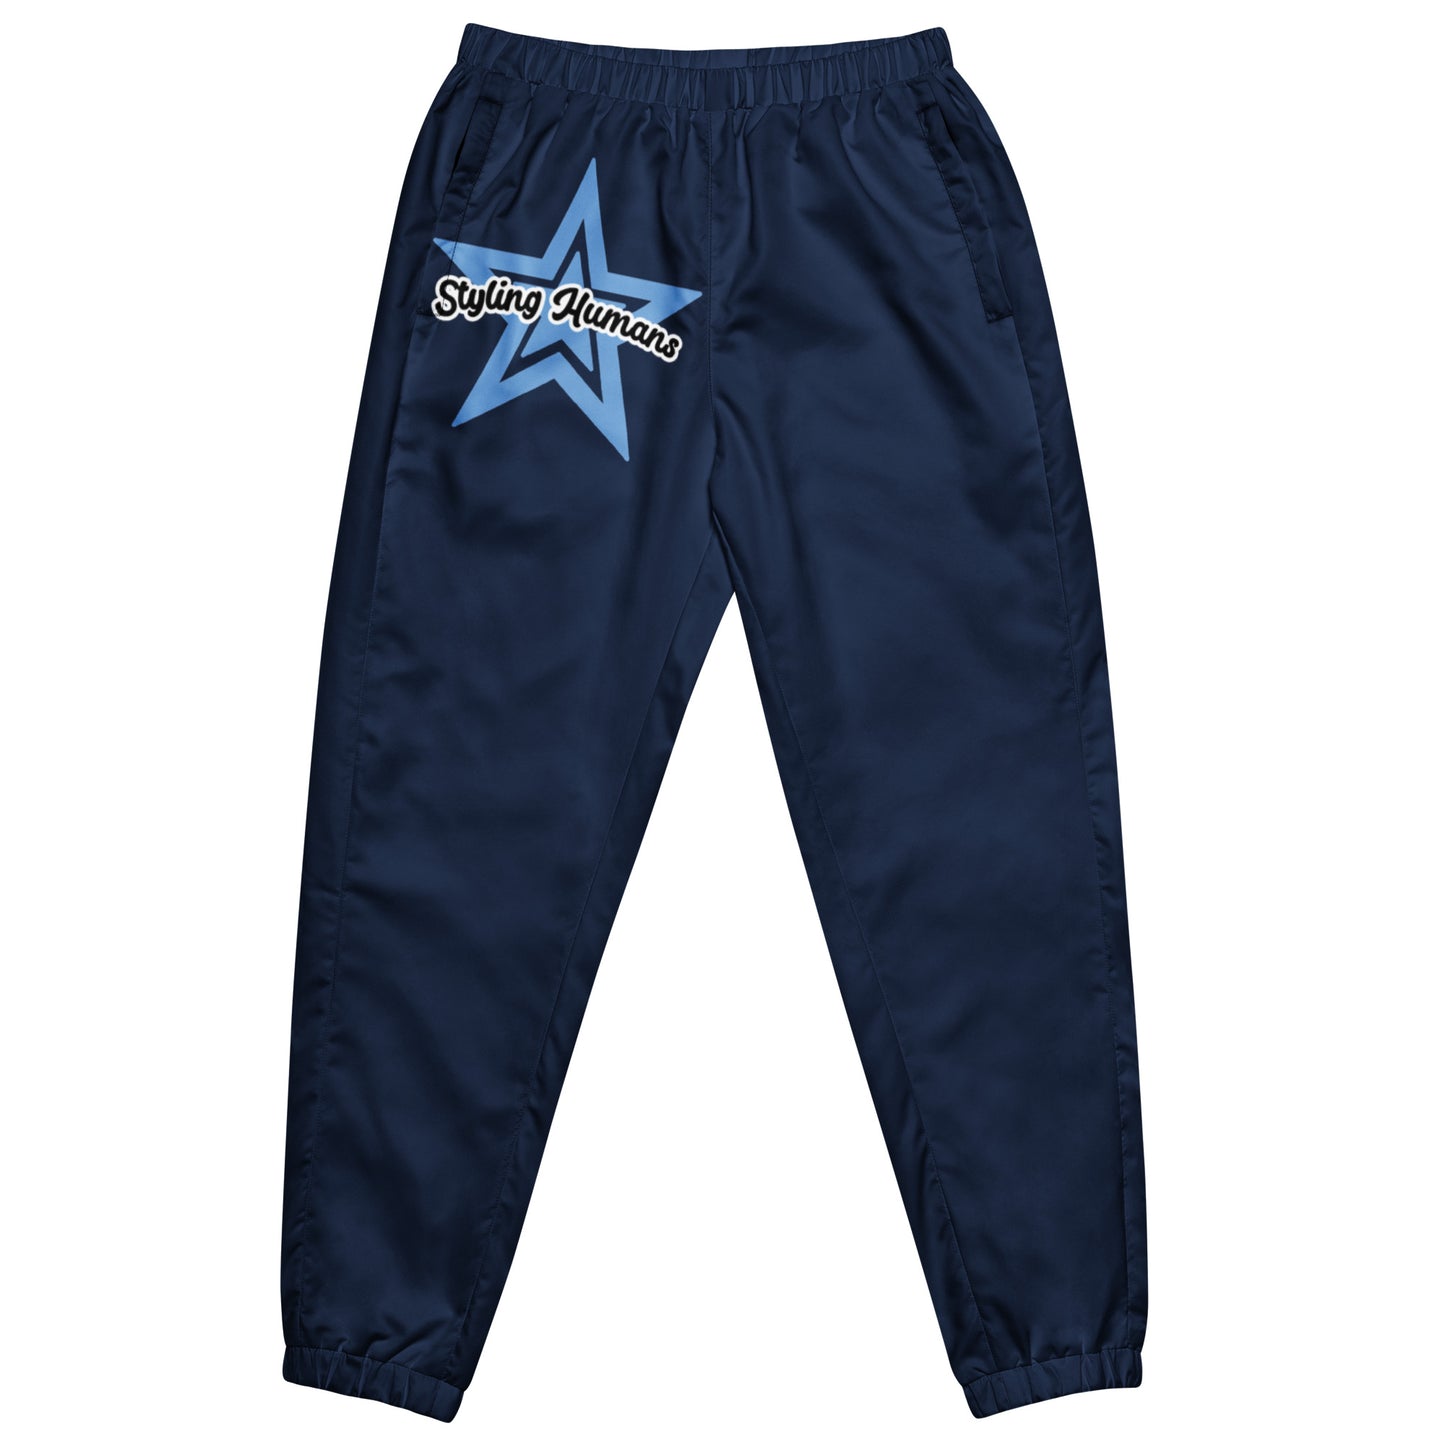 Navy Blue Unisex track pants